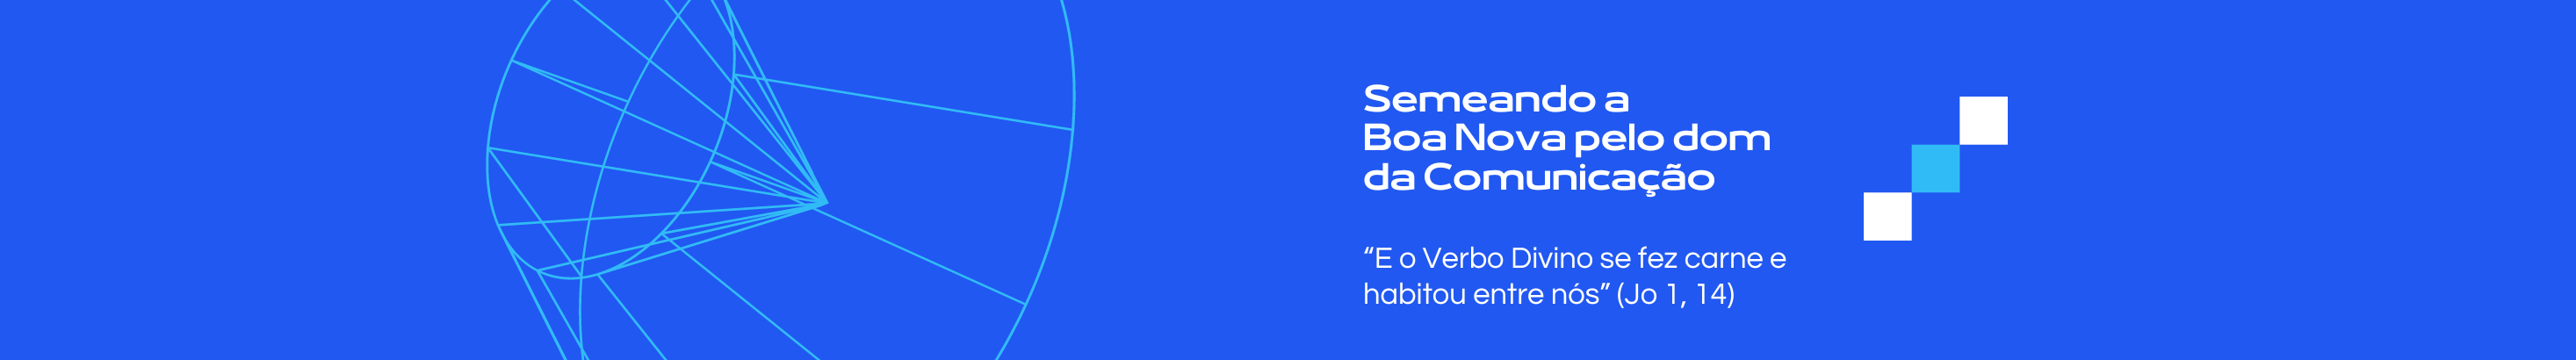 Agência Parábola's profile banner